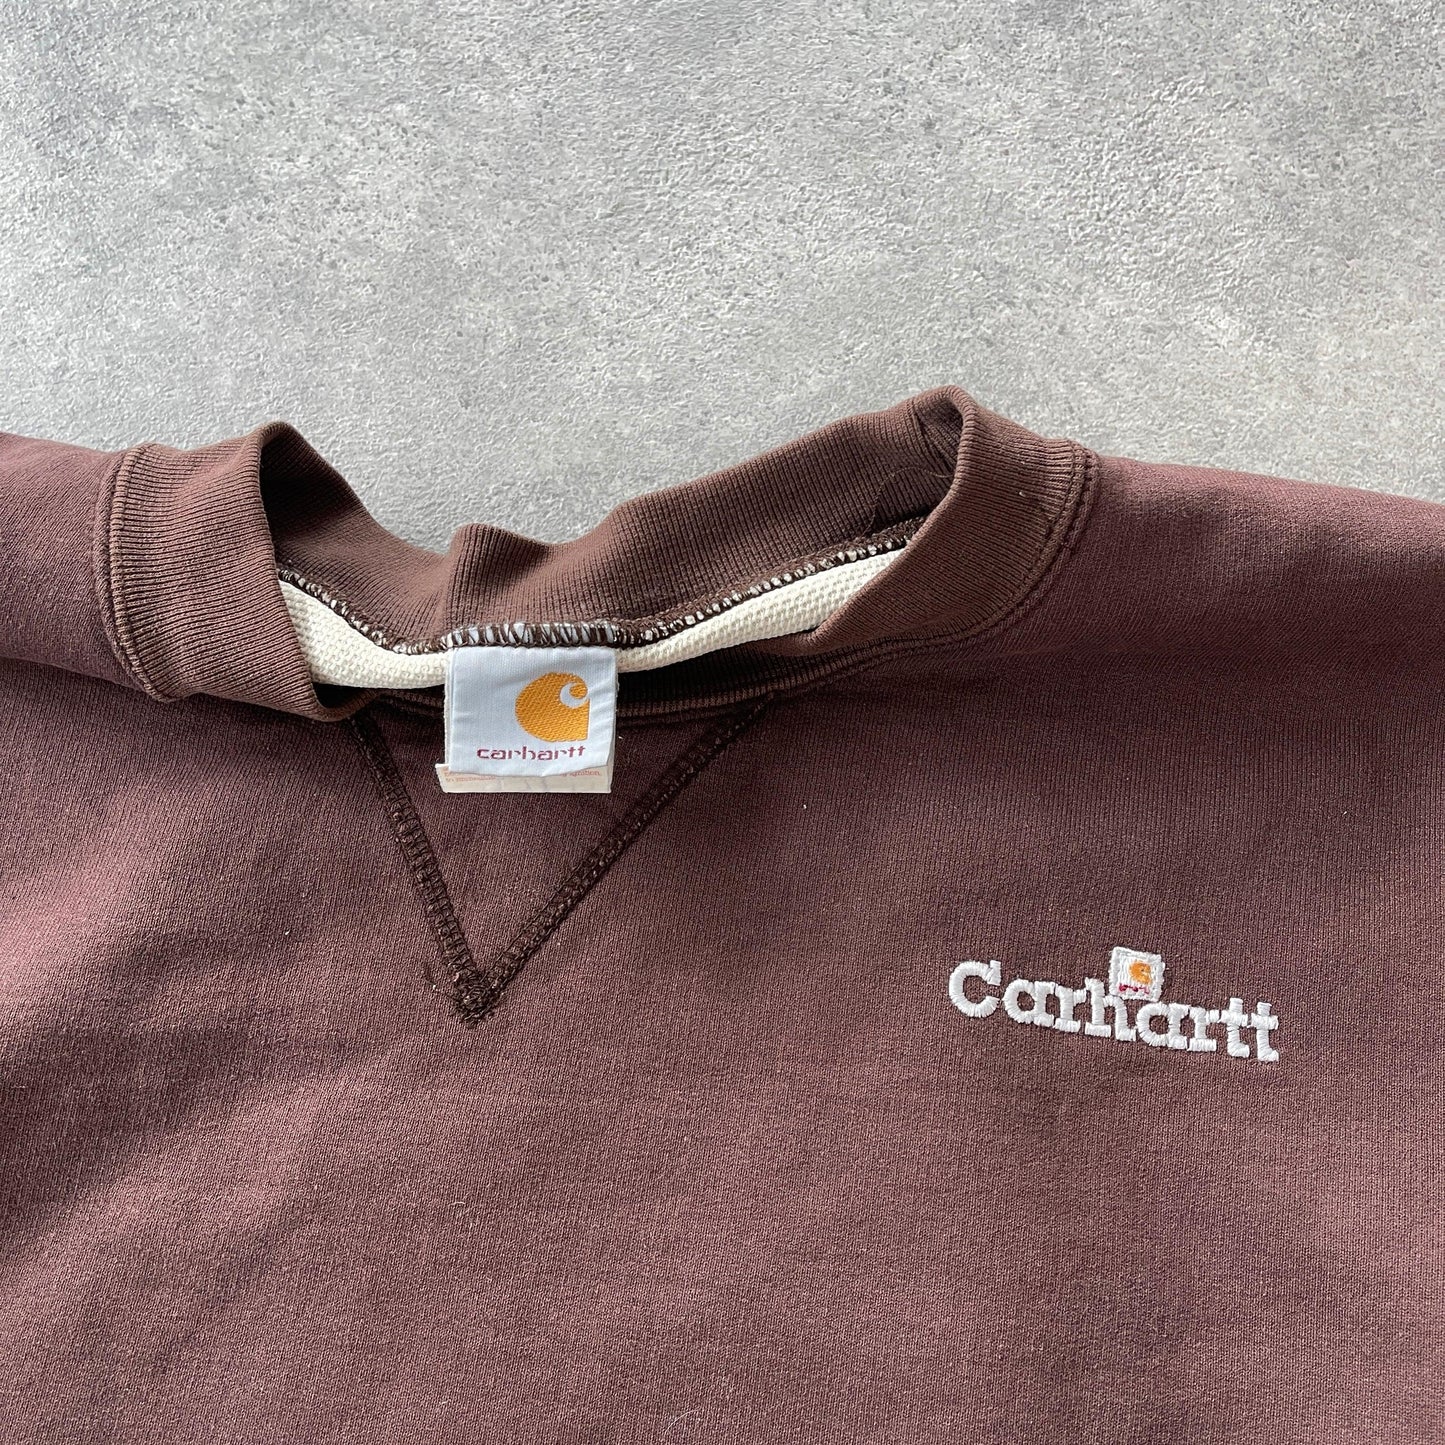 Carhartt 2001 heavyweight embroidered sweatshirt (XL) - Known Source